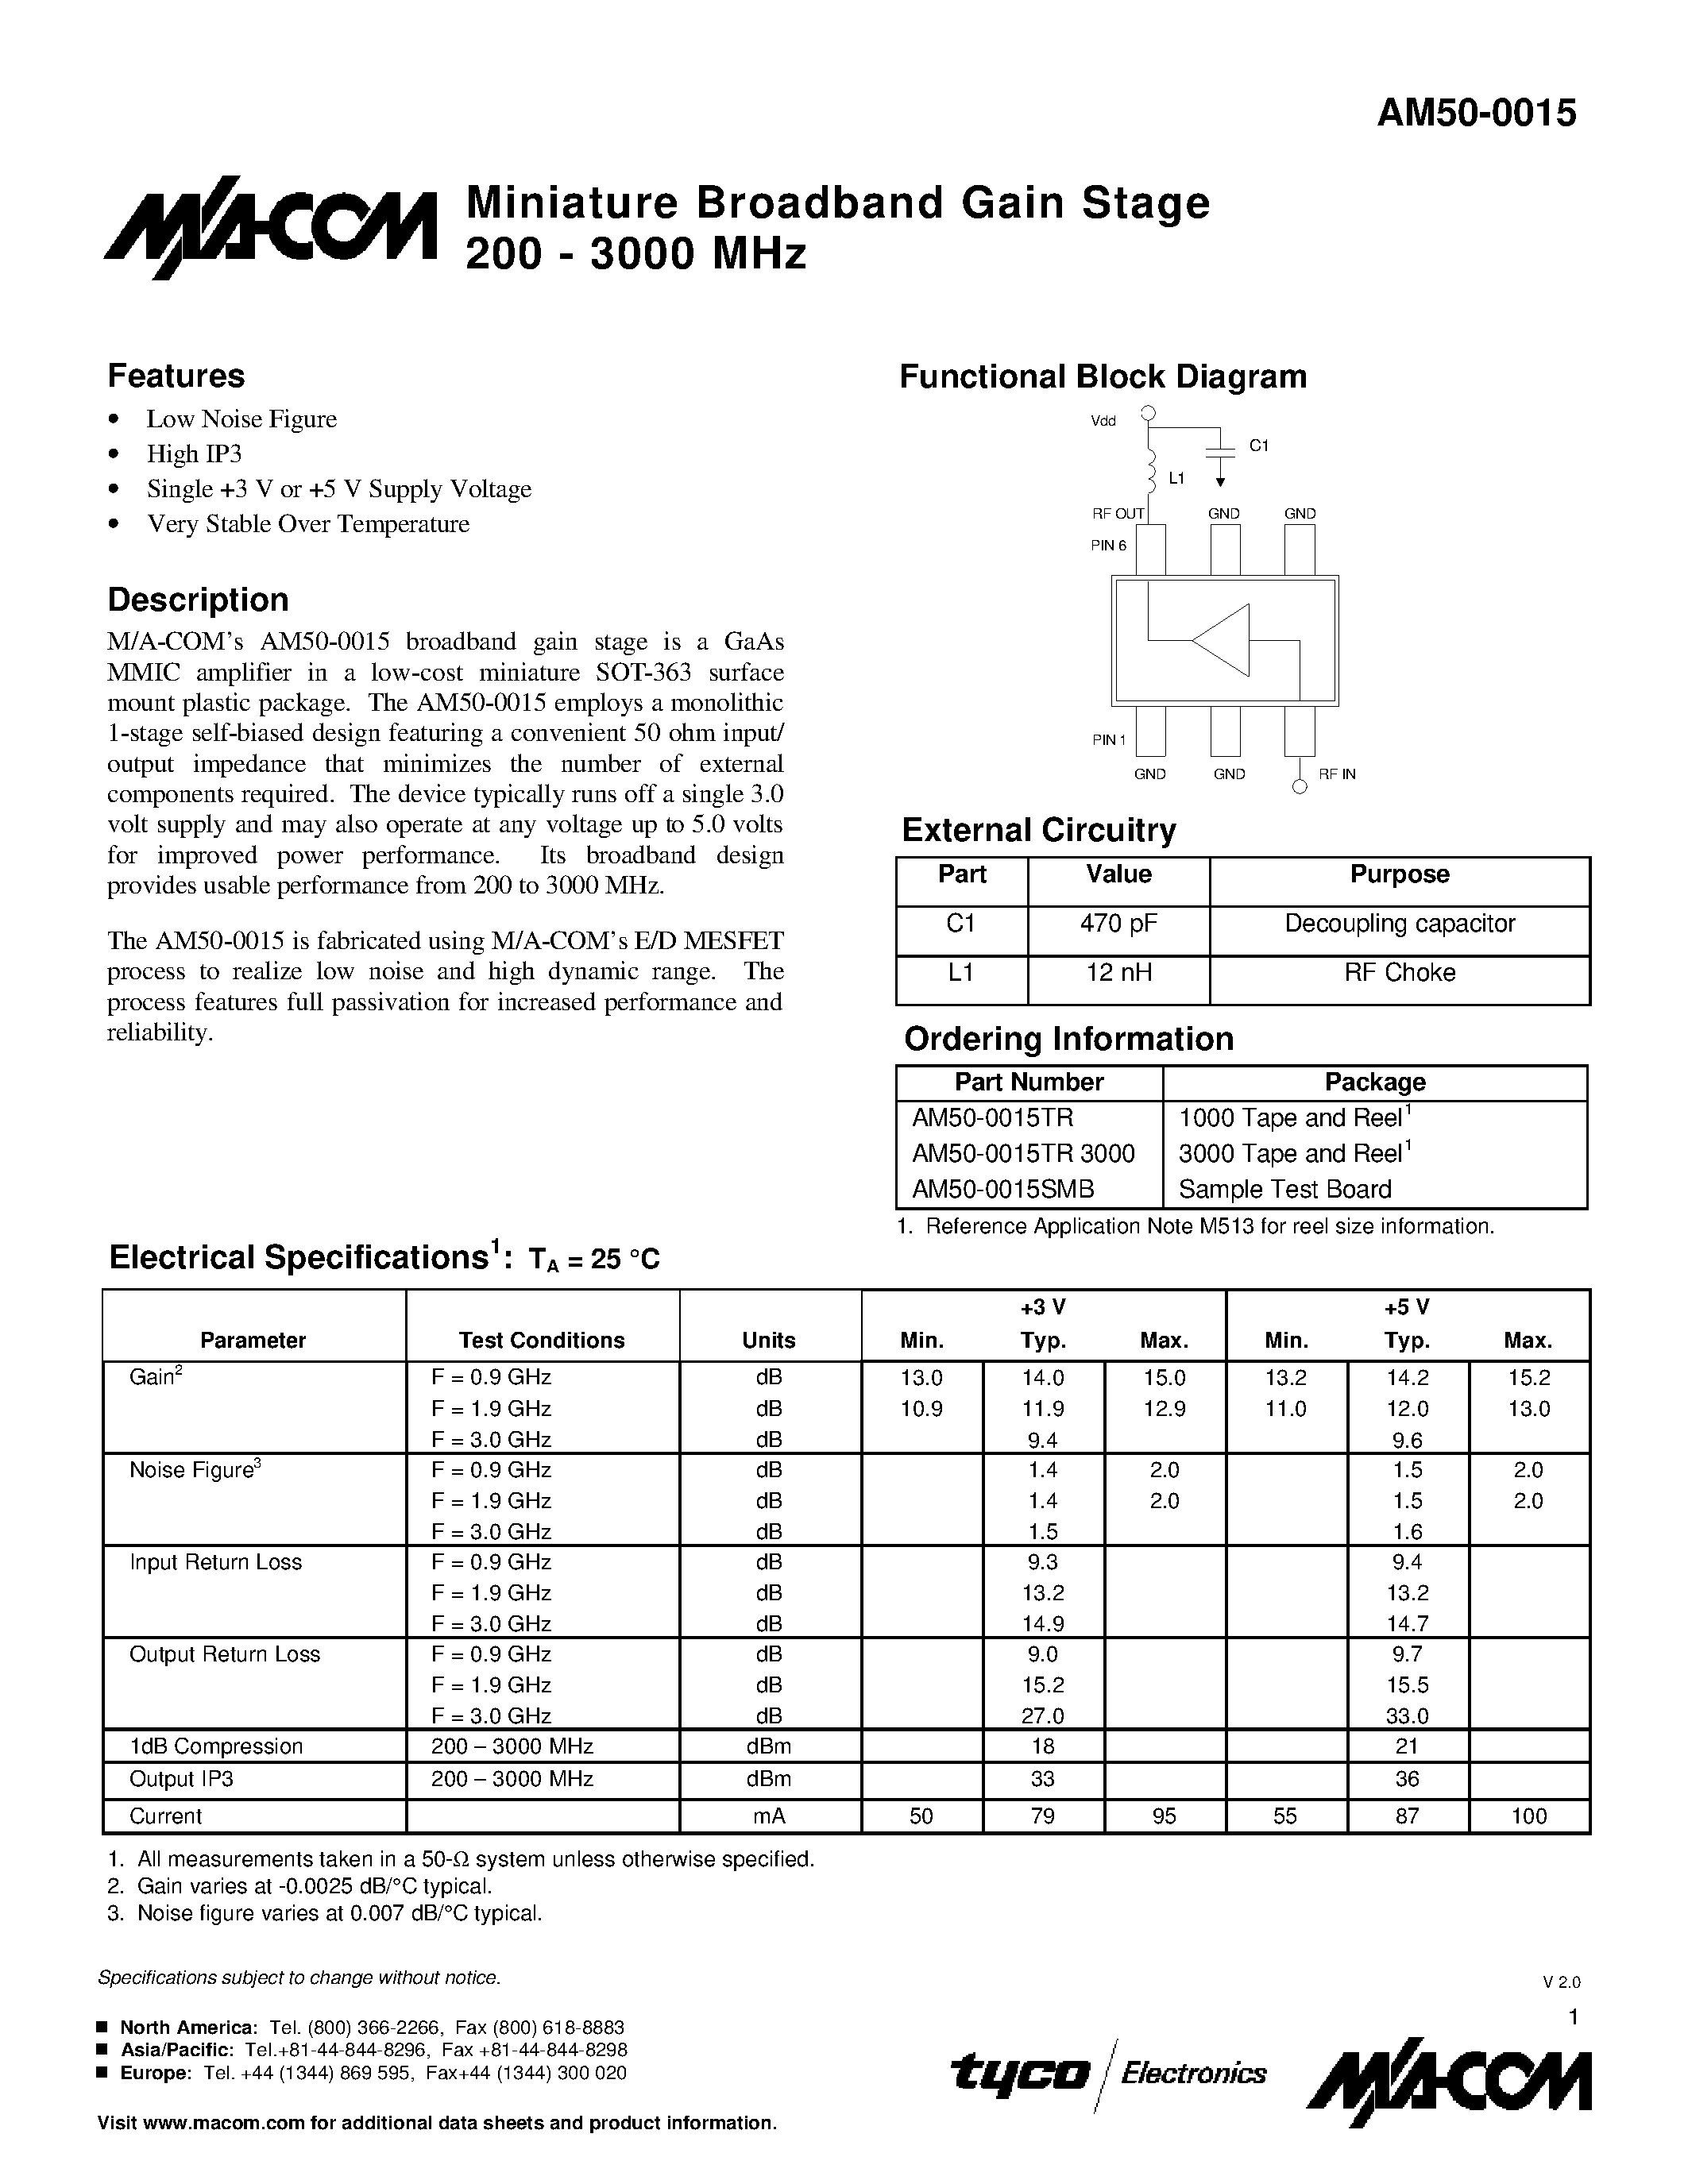 Datasheet AM50-0015TR - Miniature Broadband Gain Stage 200 - 3000 MHz page 1